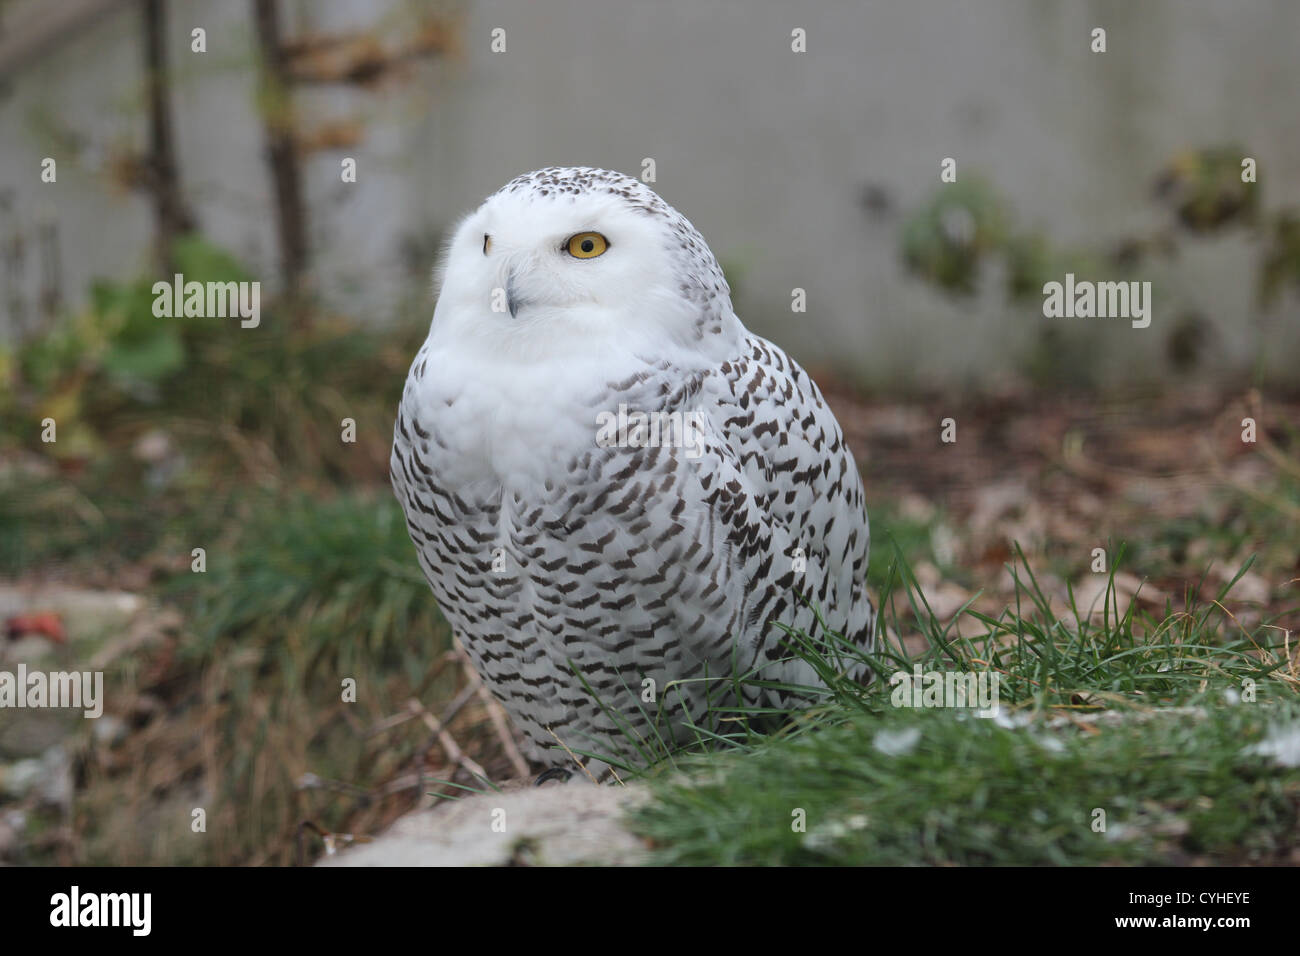 Snowy owl with striking yellow eyes Stock Photo